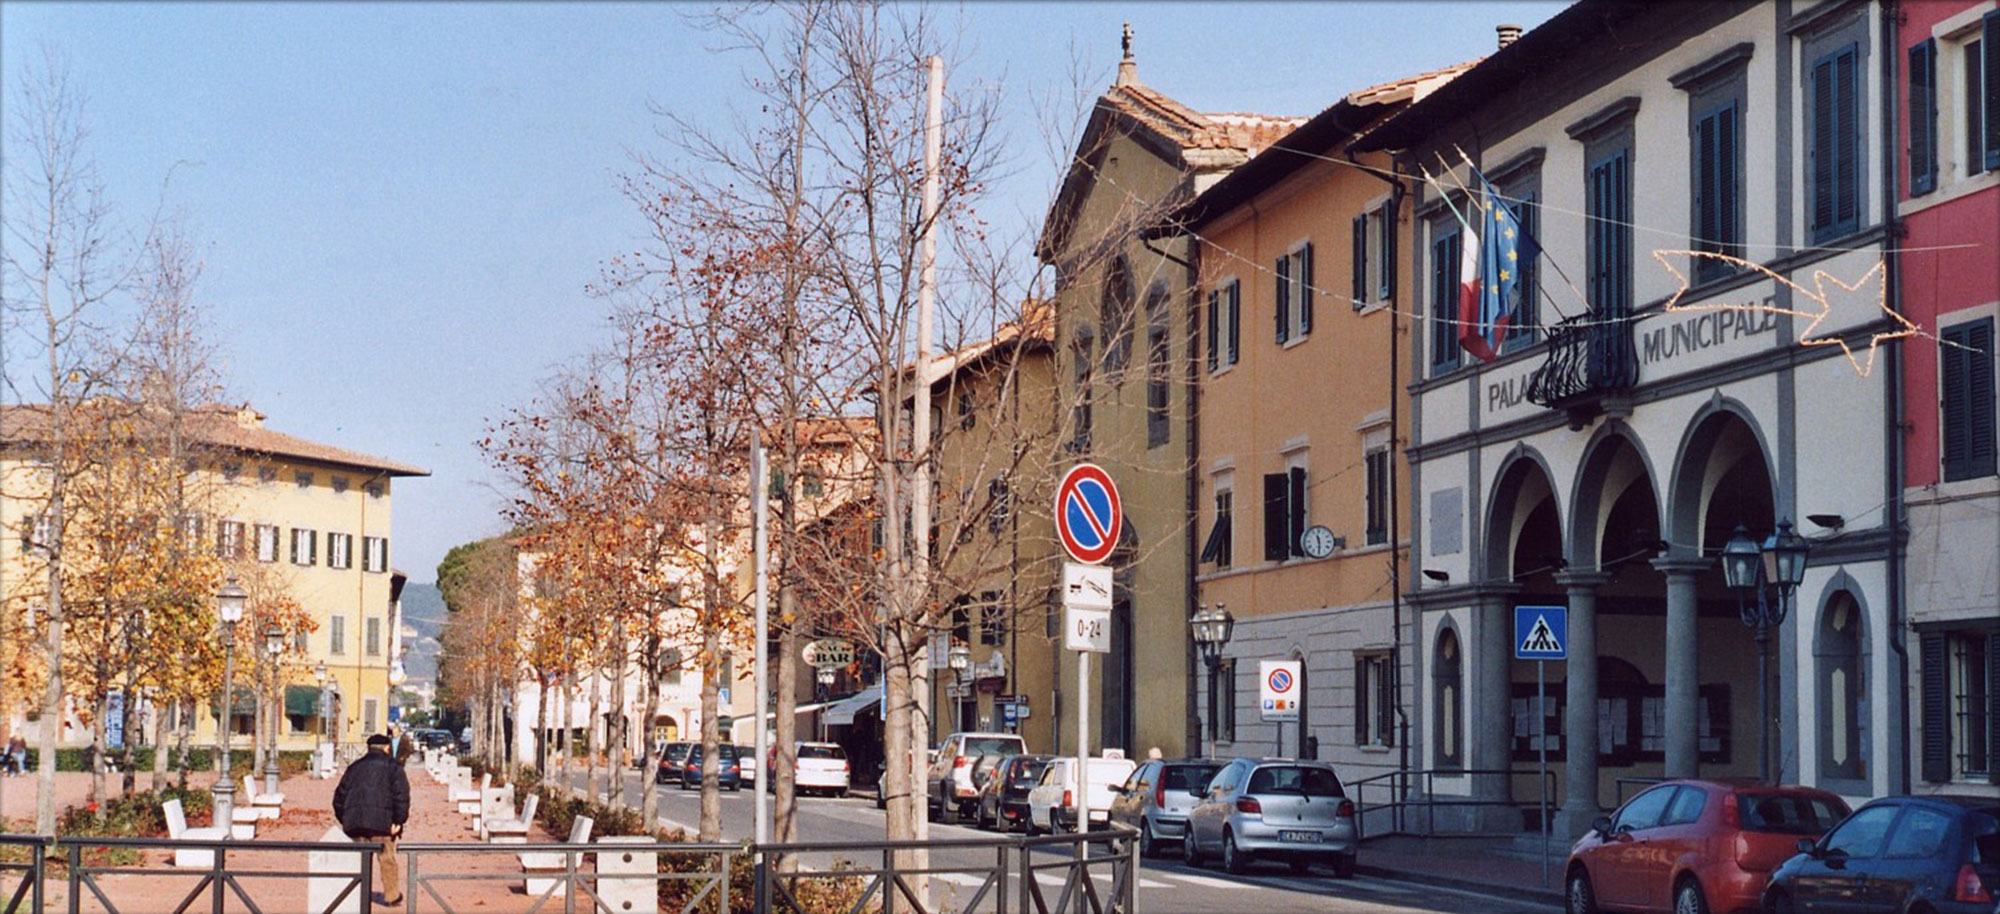 Corte Tommasi - Etruscan Museum of Bientina - Surroundings Tuscany apartments